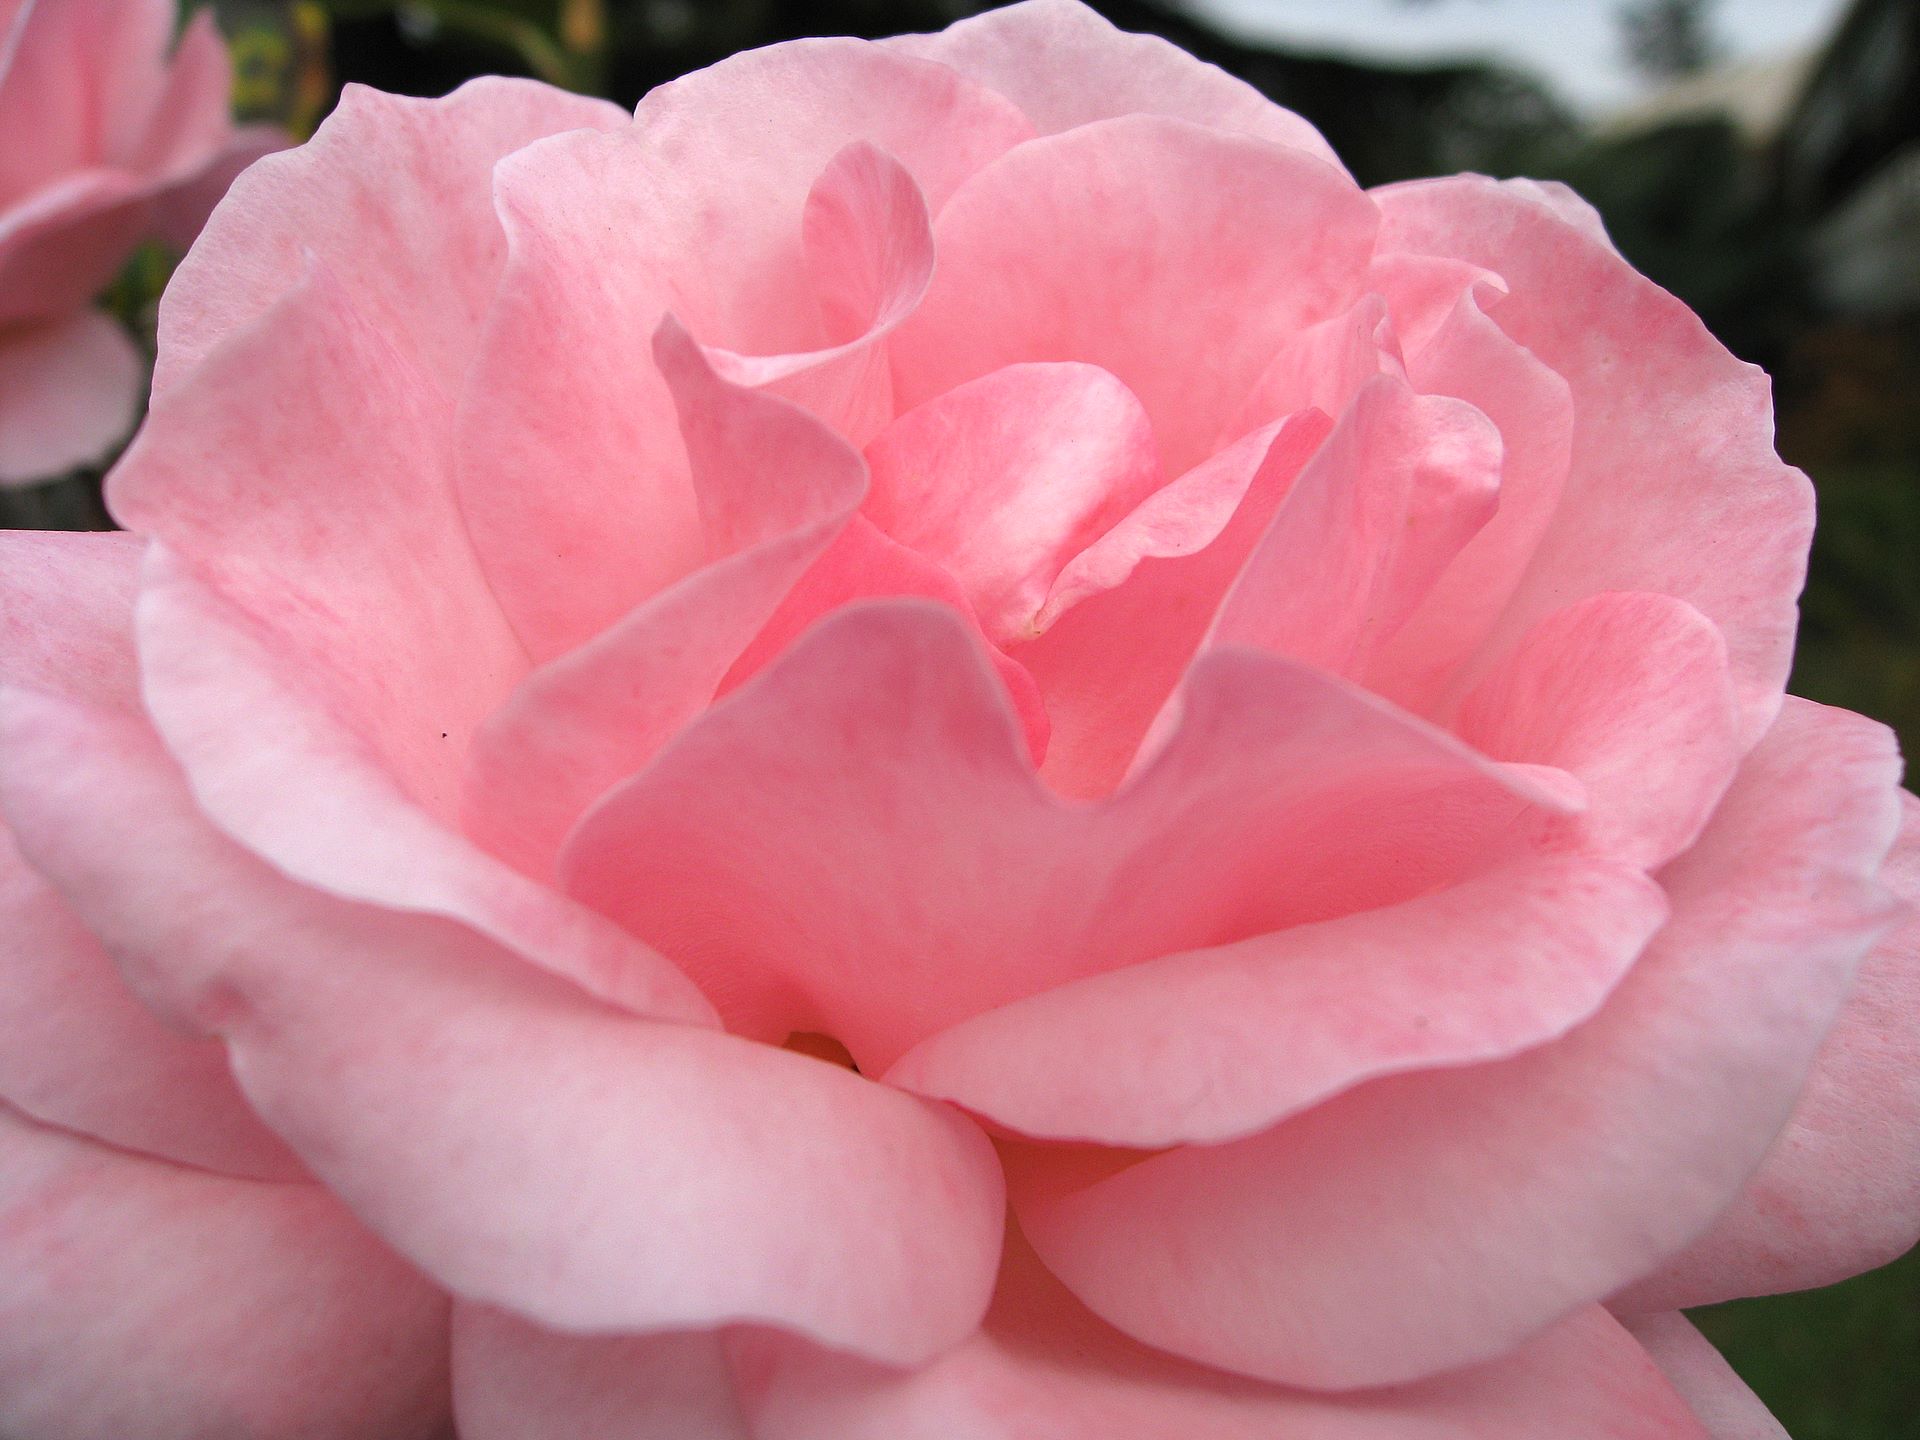 rosentapete bild,blume,blütenblatt,blühende pflanze,rosa,julia kind stand auf